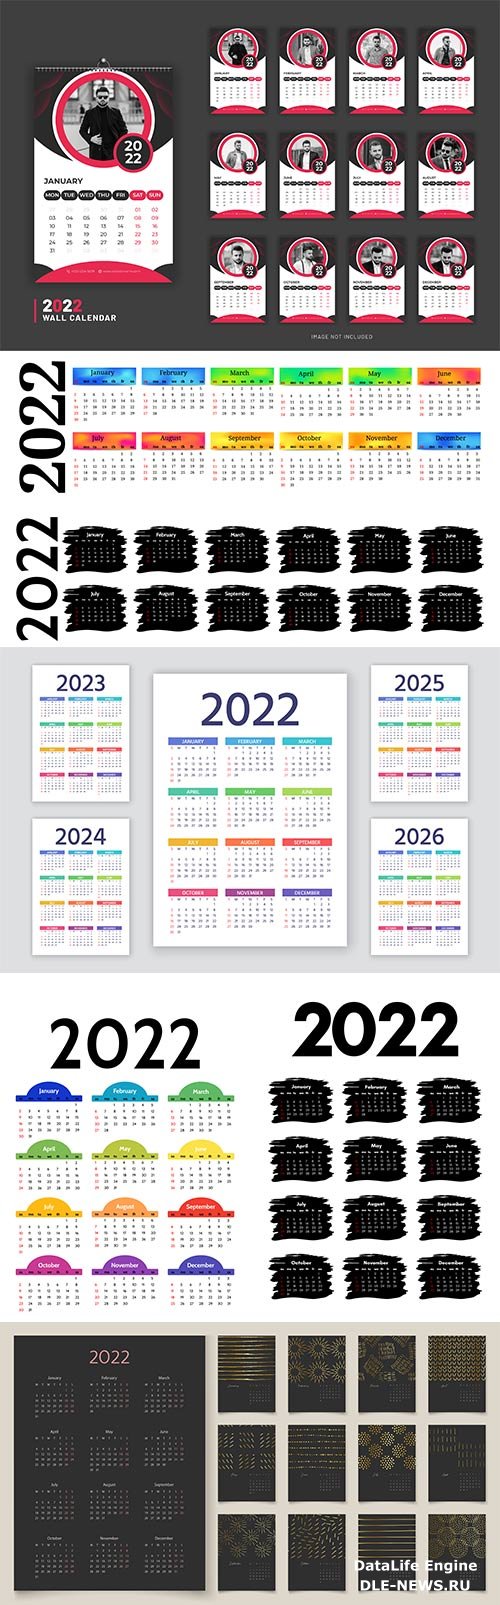 Calendar 2022 design template premium vector